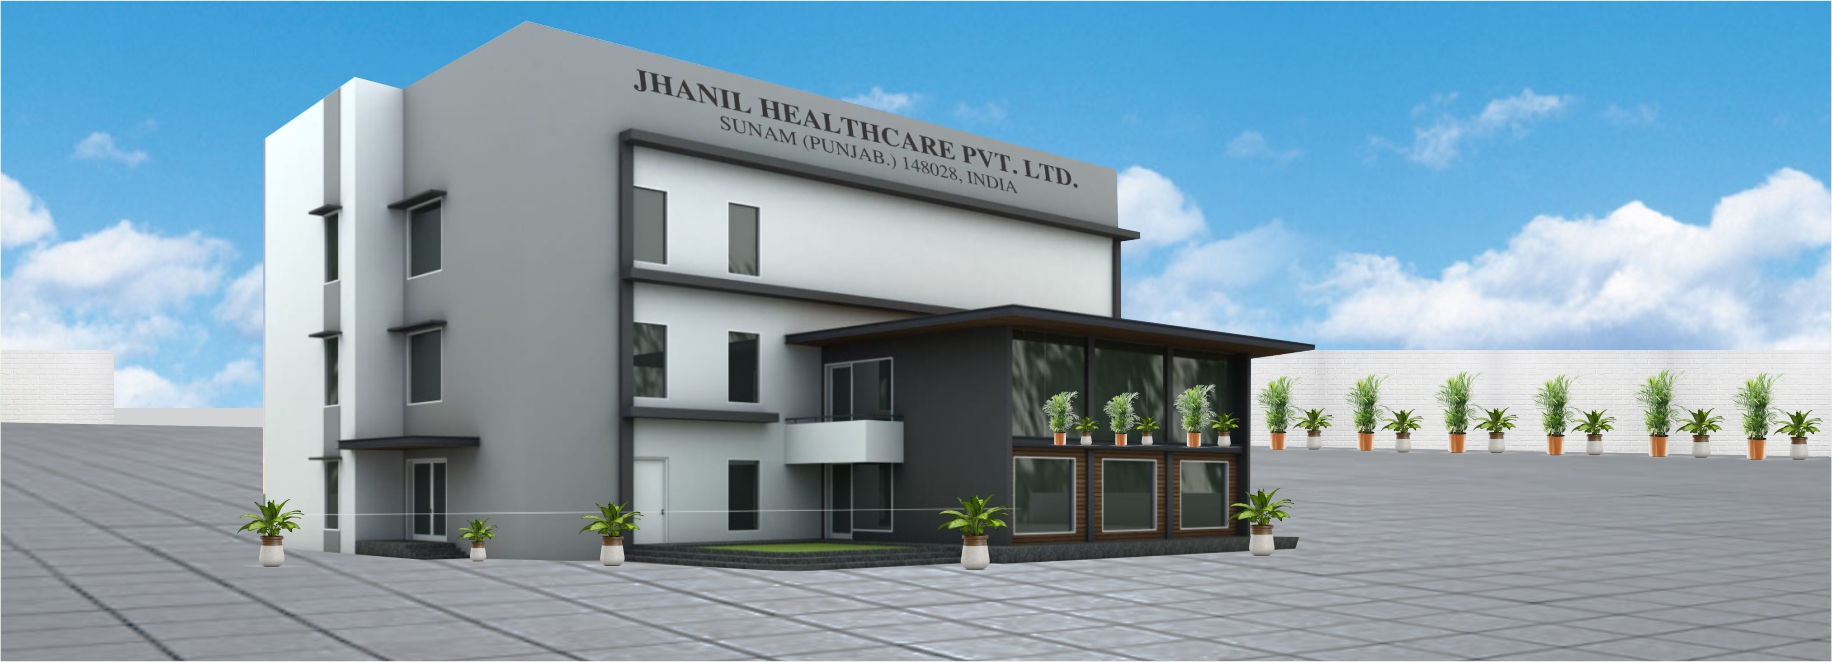 Jhanil healthcare pvt. ltd plant image of Suman